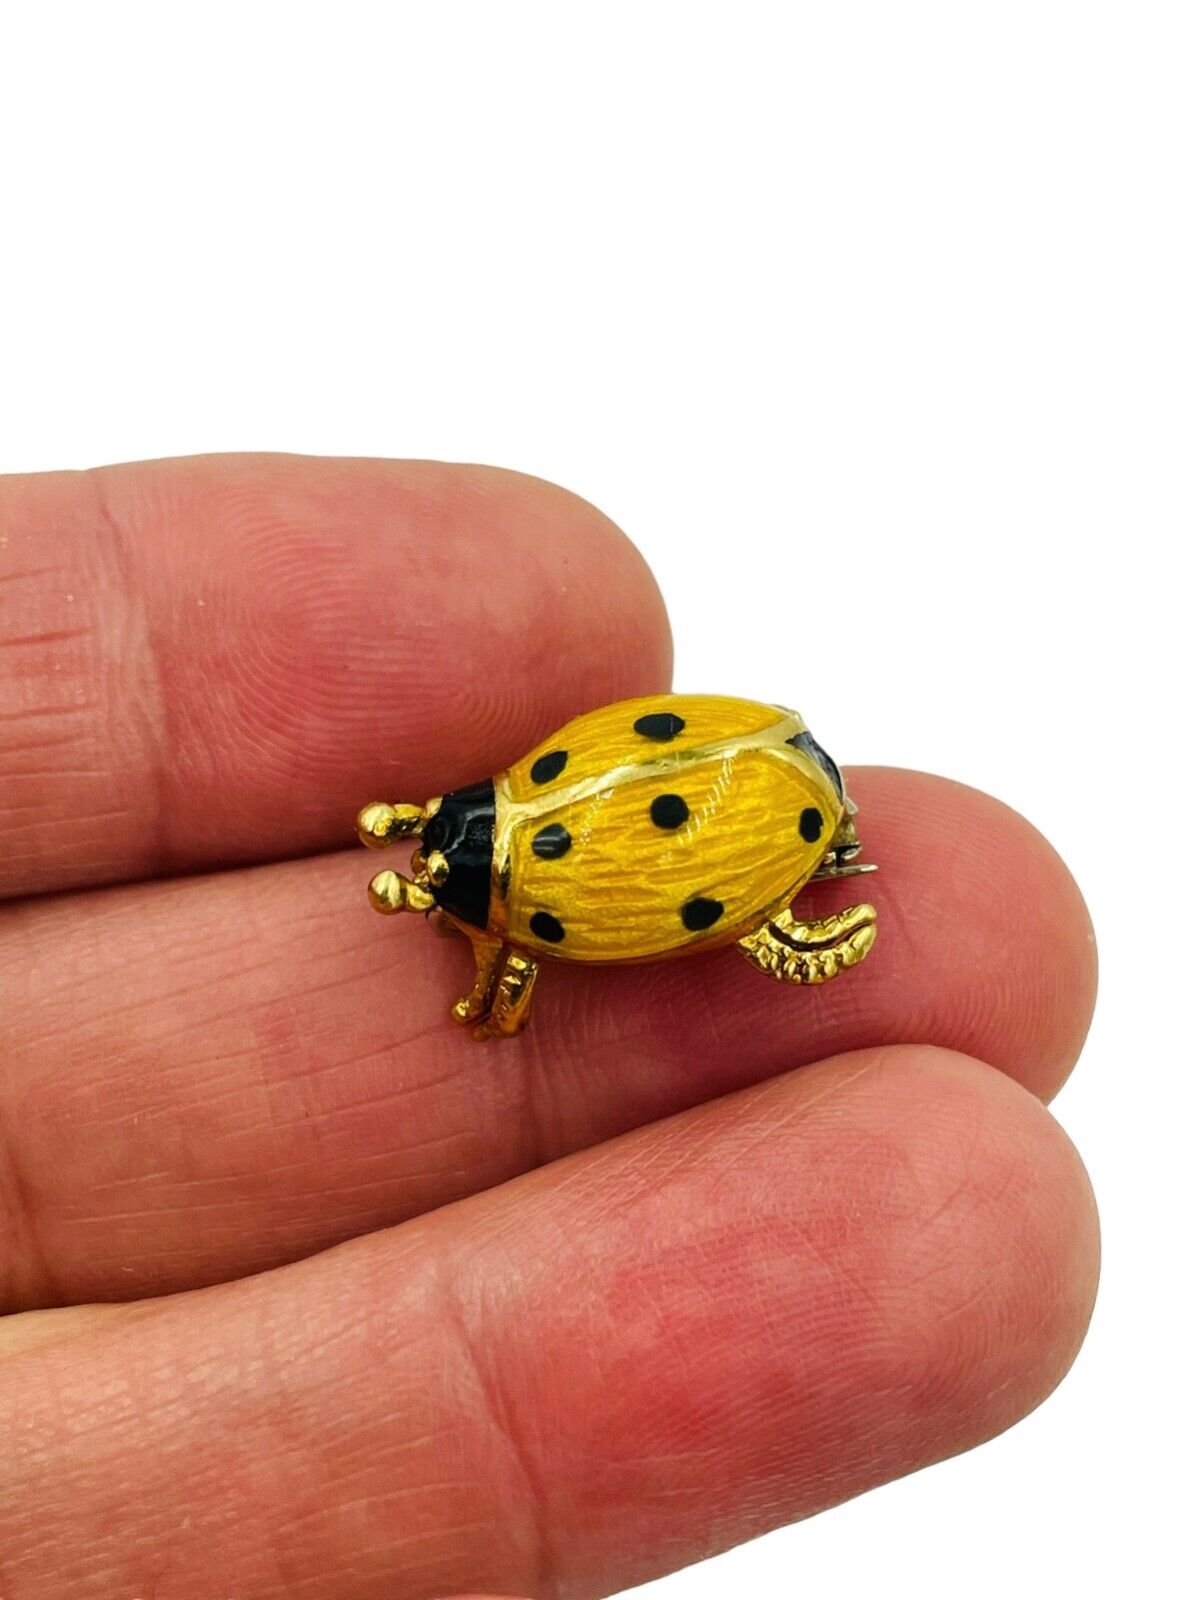 Italian Lady Bug Brooch Pin 18K Yellow Gold Enamel